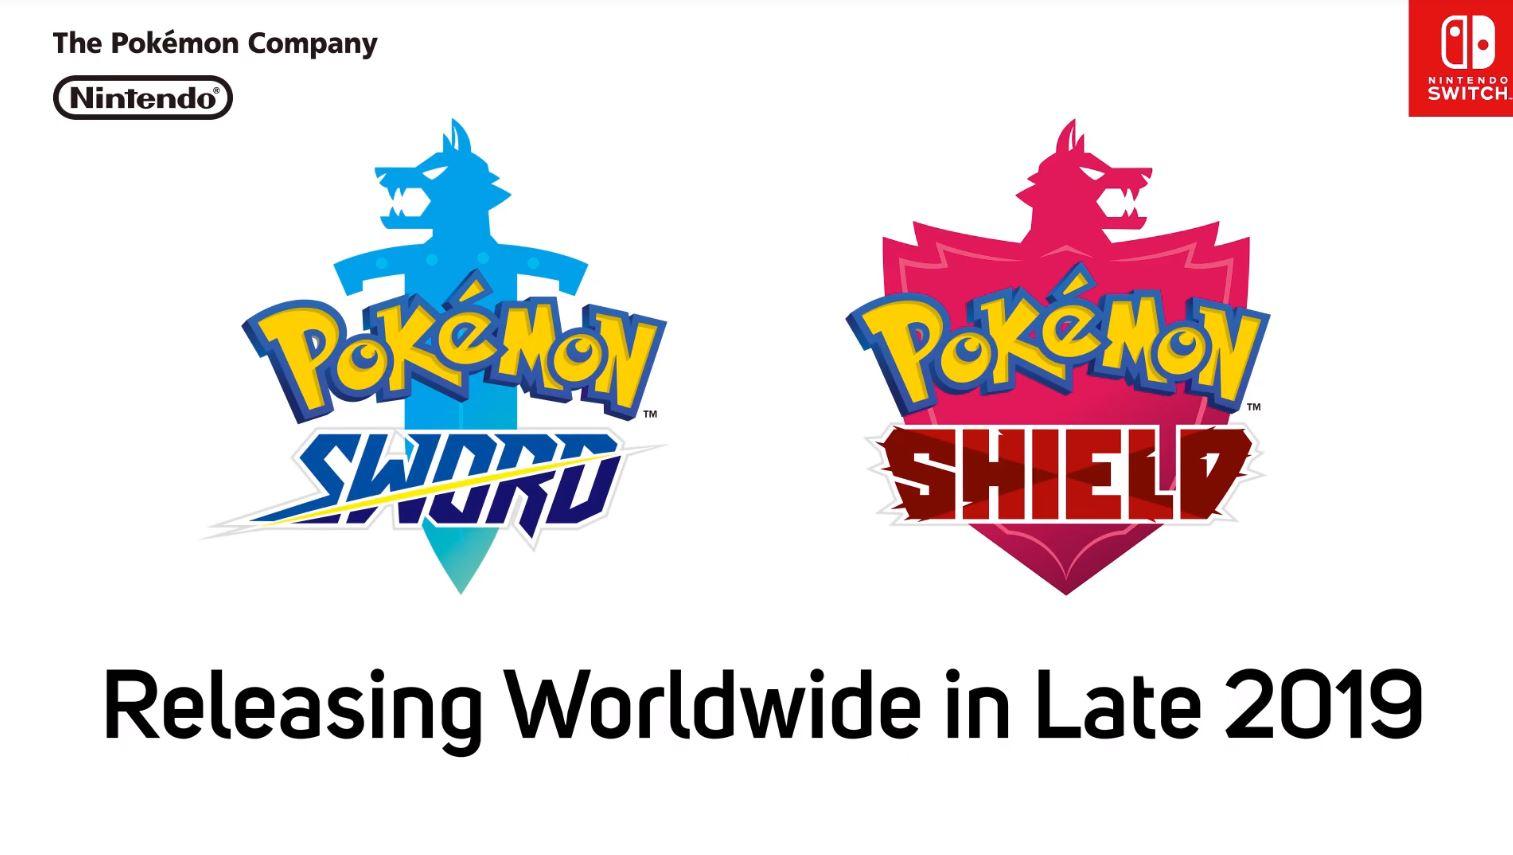 Pokemon Sword and Pokemon Shield announced